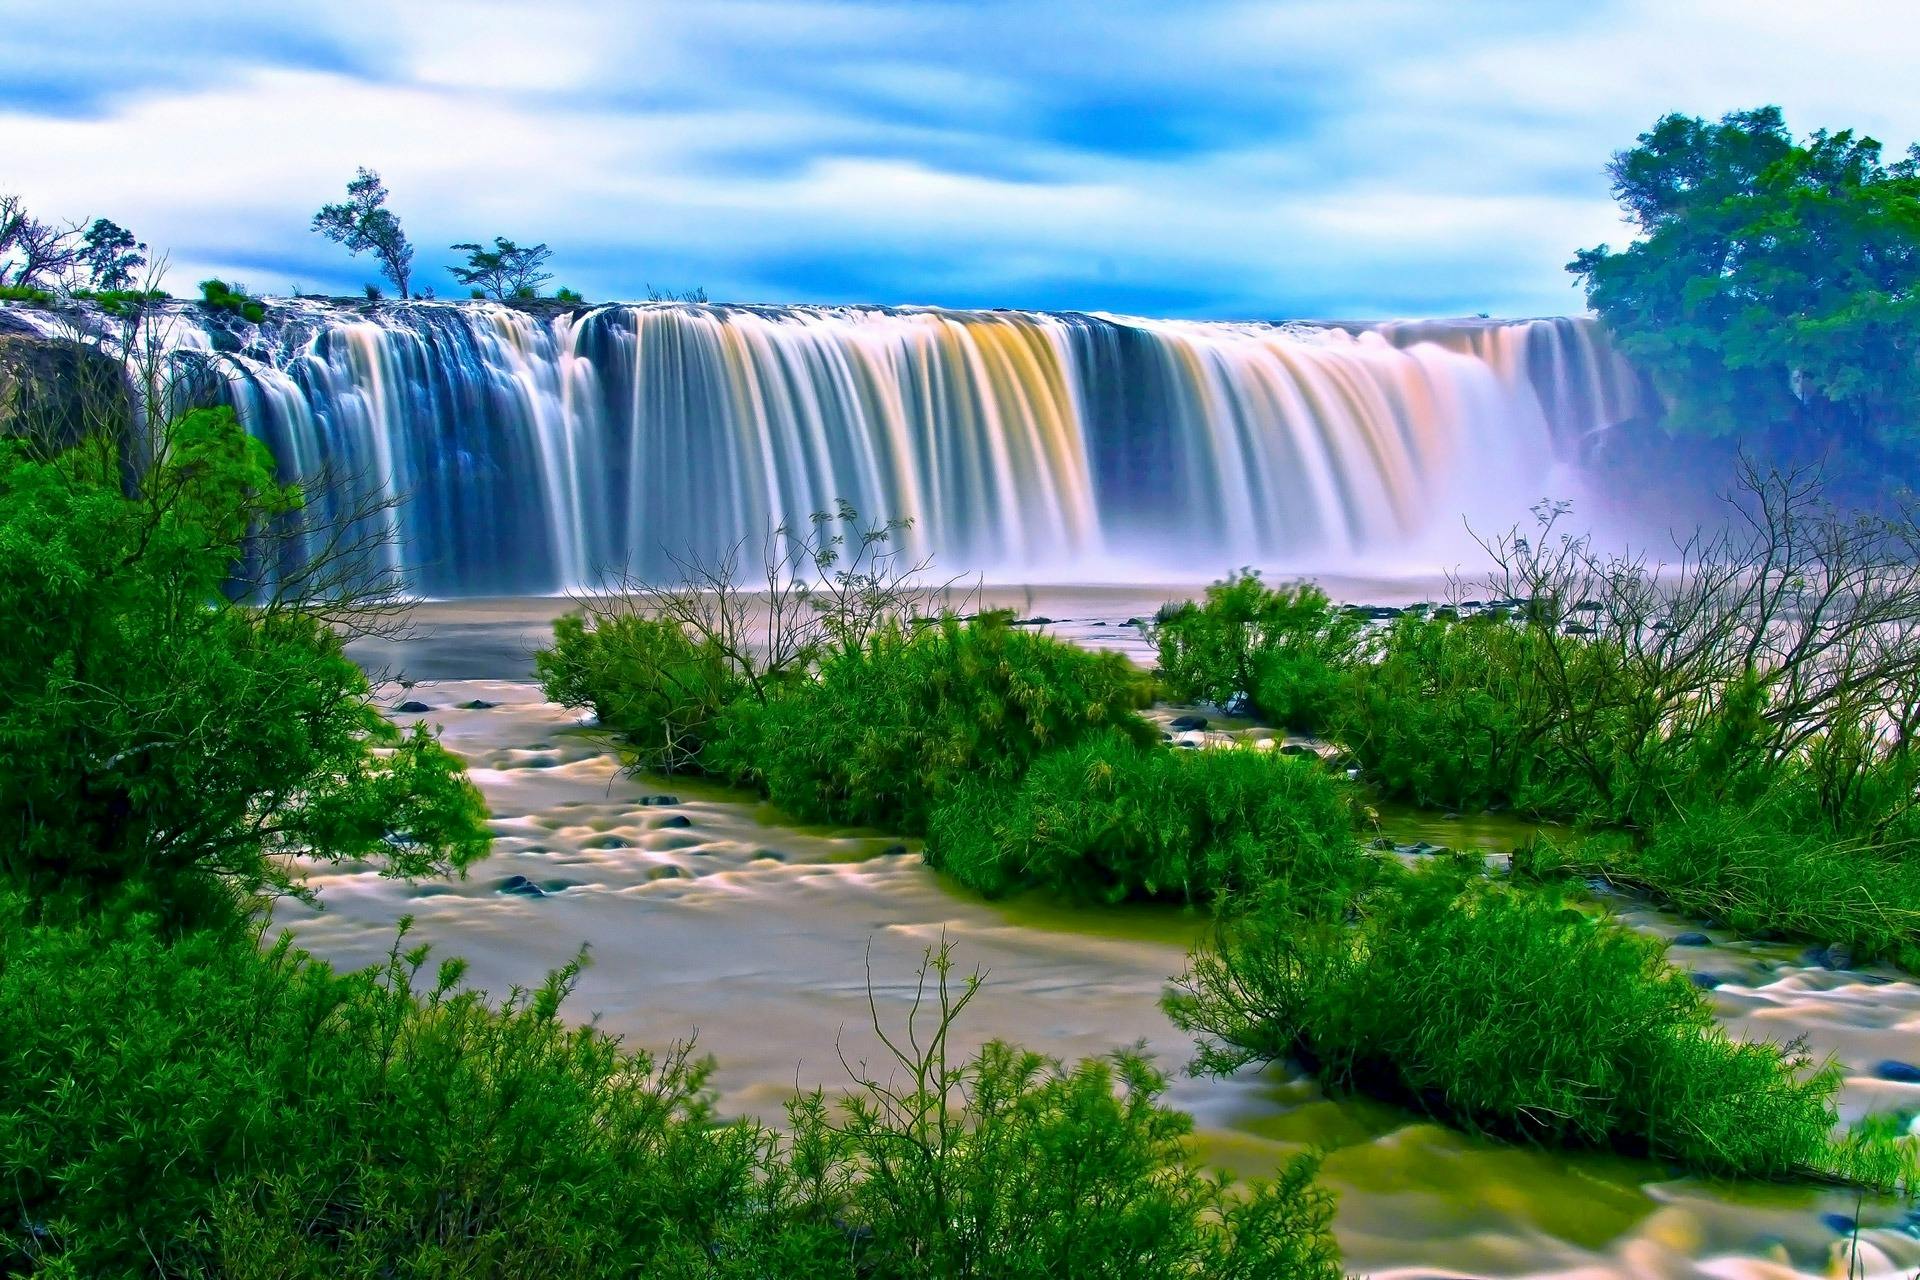 Water Falls Surrounding Green Grass during Daytime · Free Stock Photo